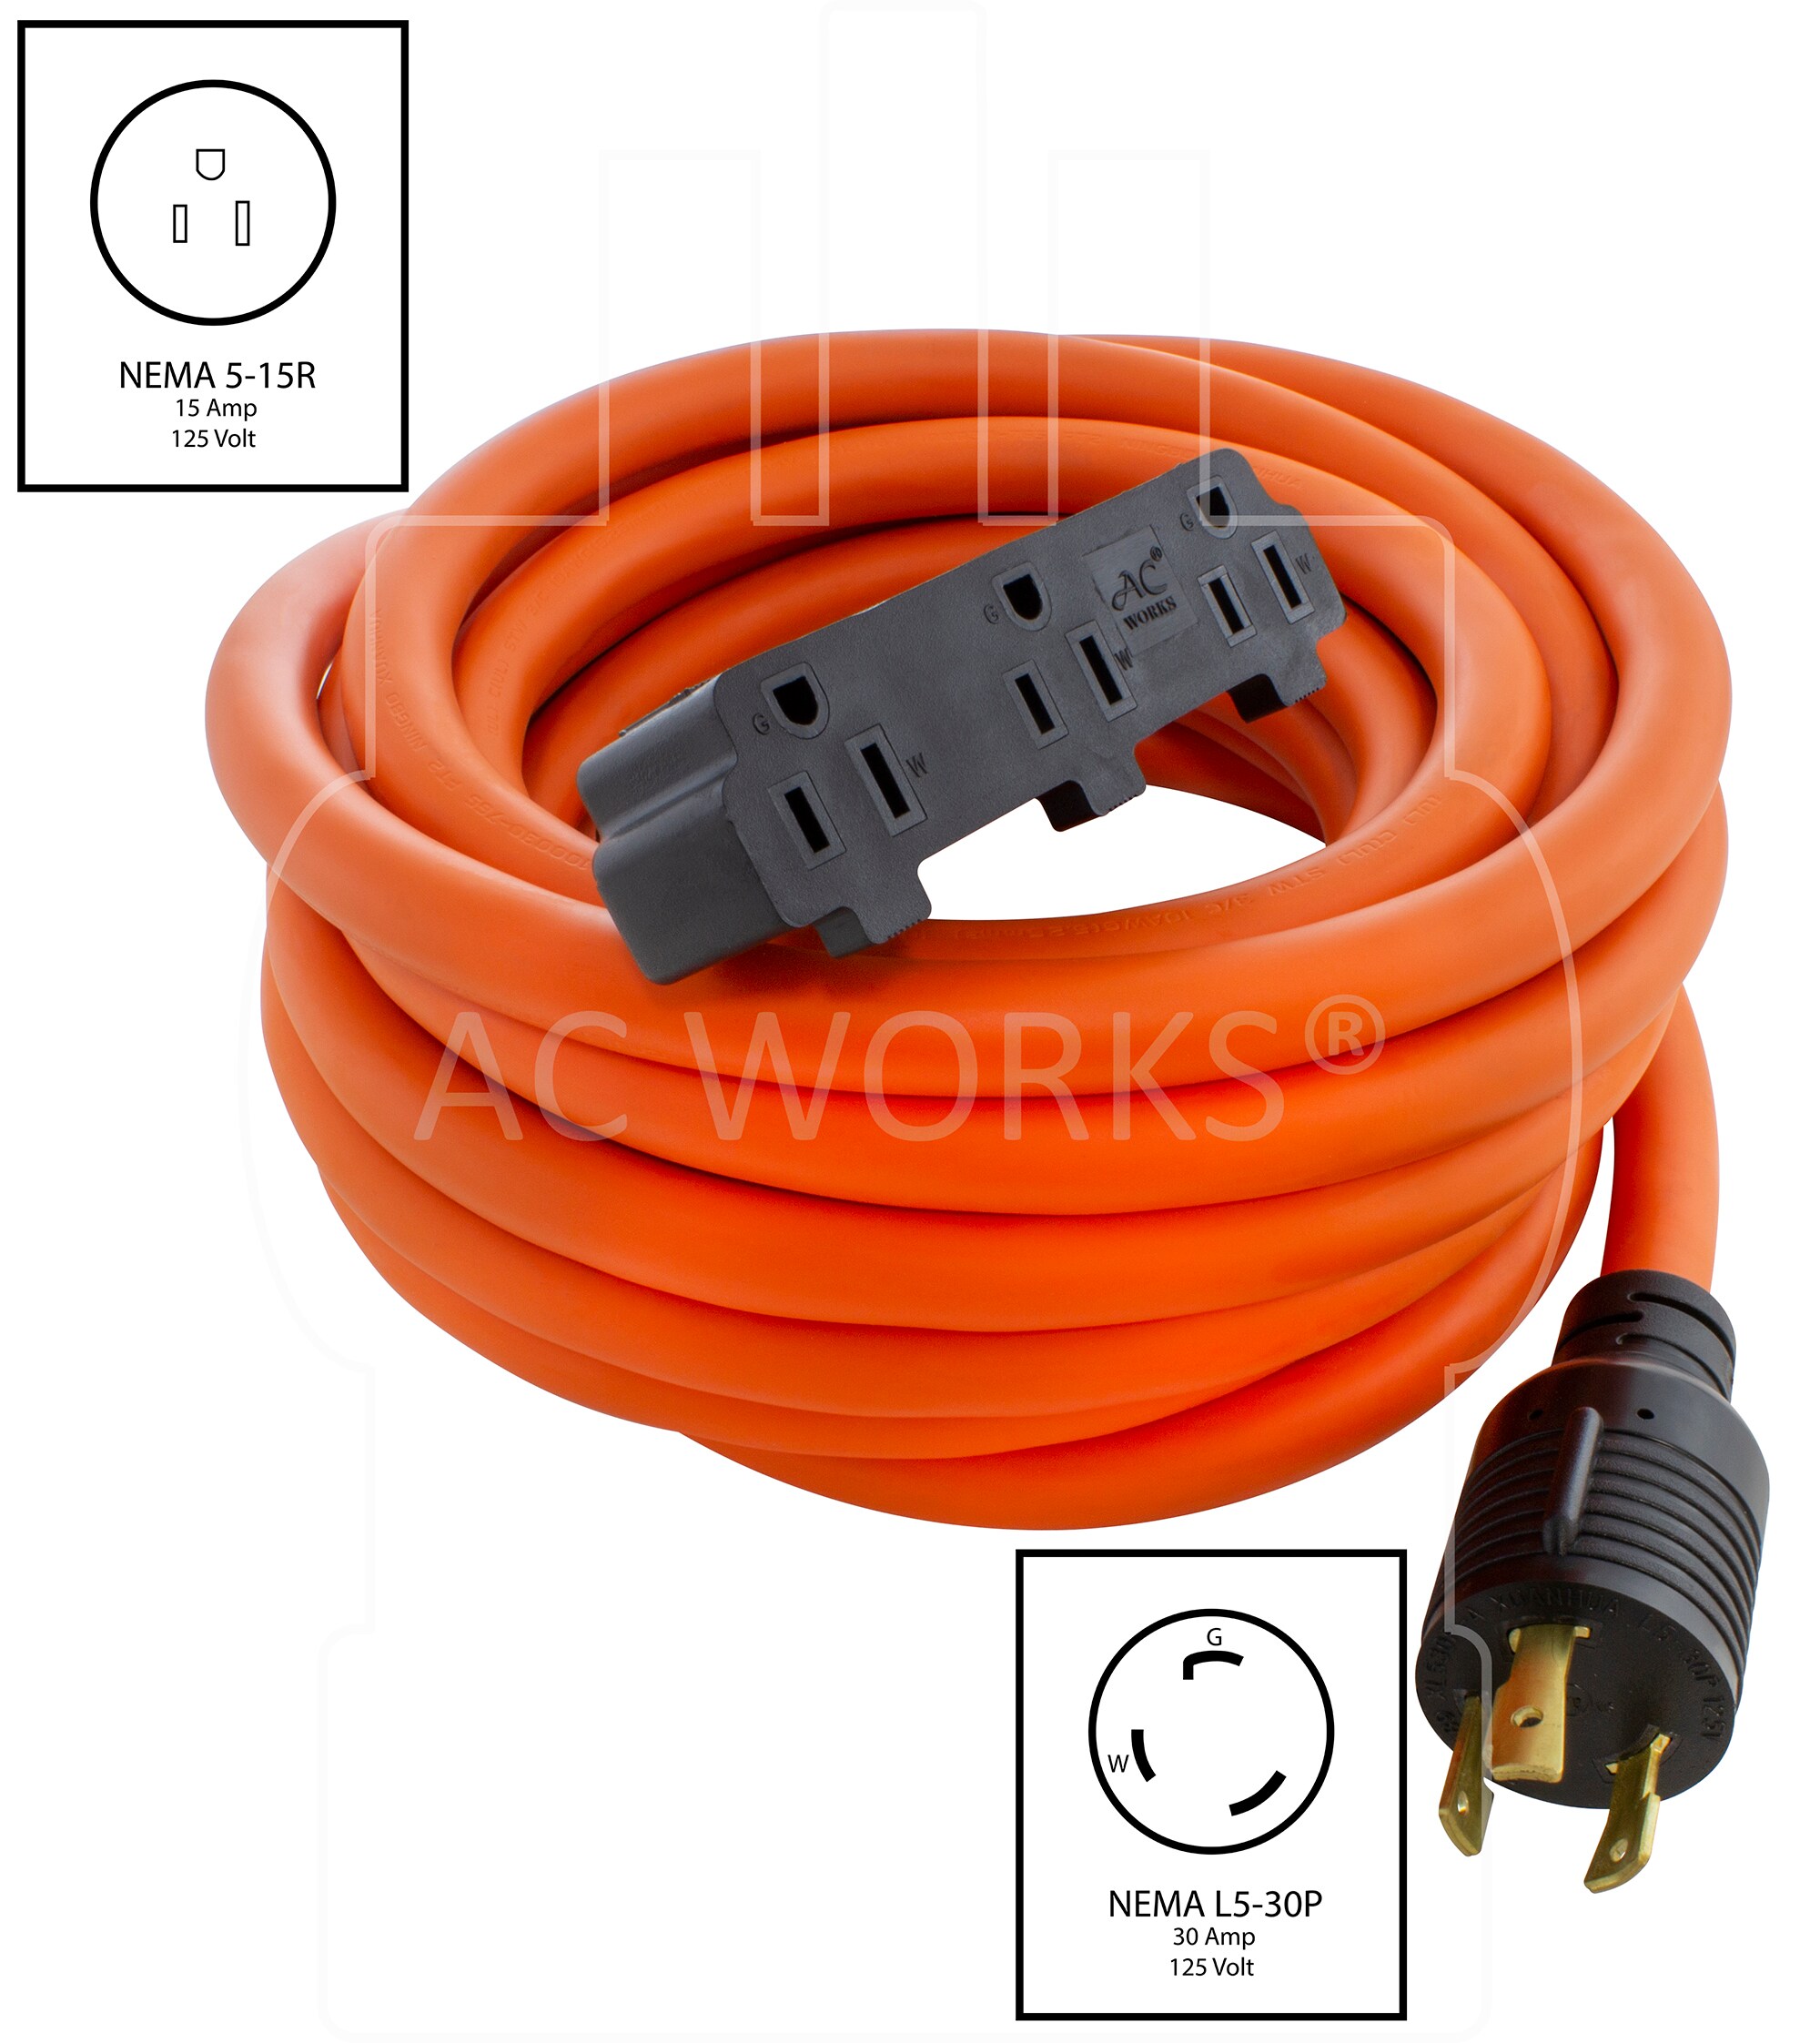 Nema L5-30P 30 Amp 125 Volt Connector, L5-30 Locking Power Cord